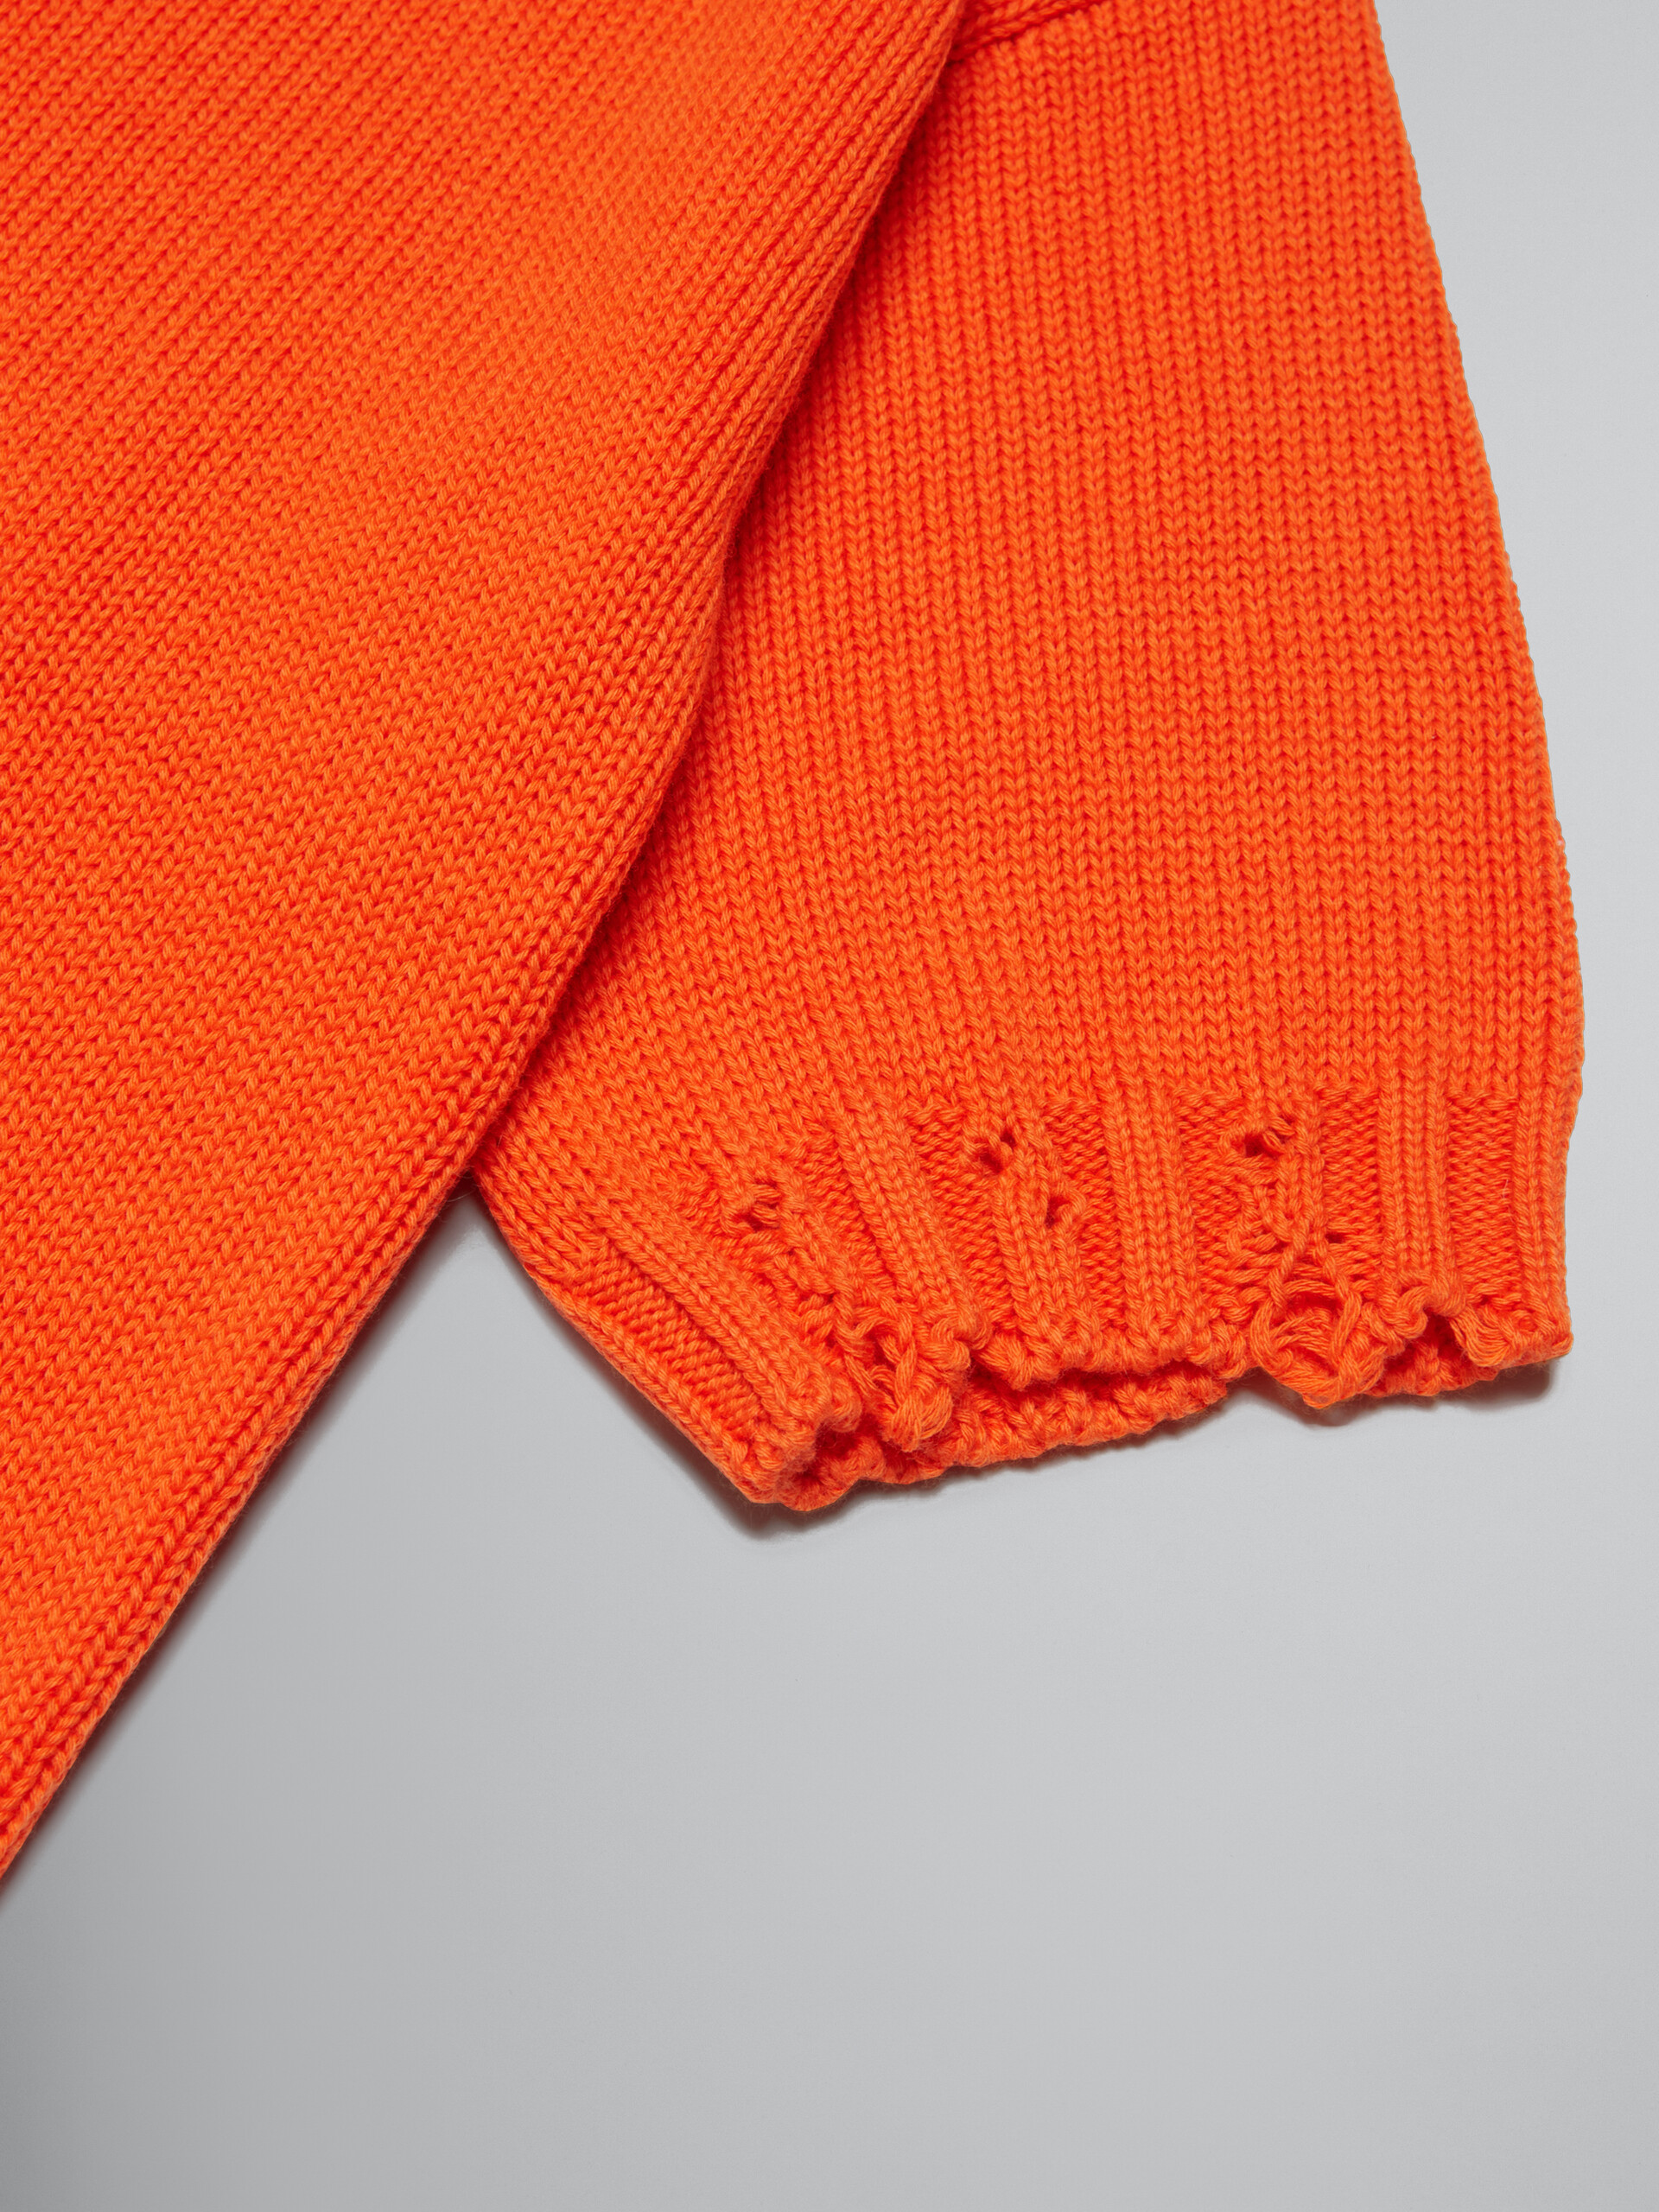 Vestido de algodón naranja - Vestidos - Image 4